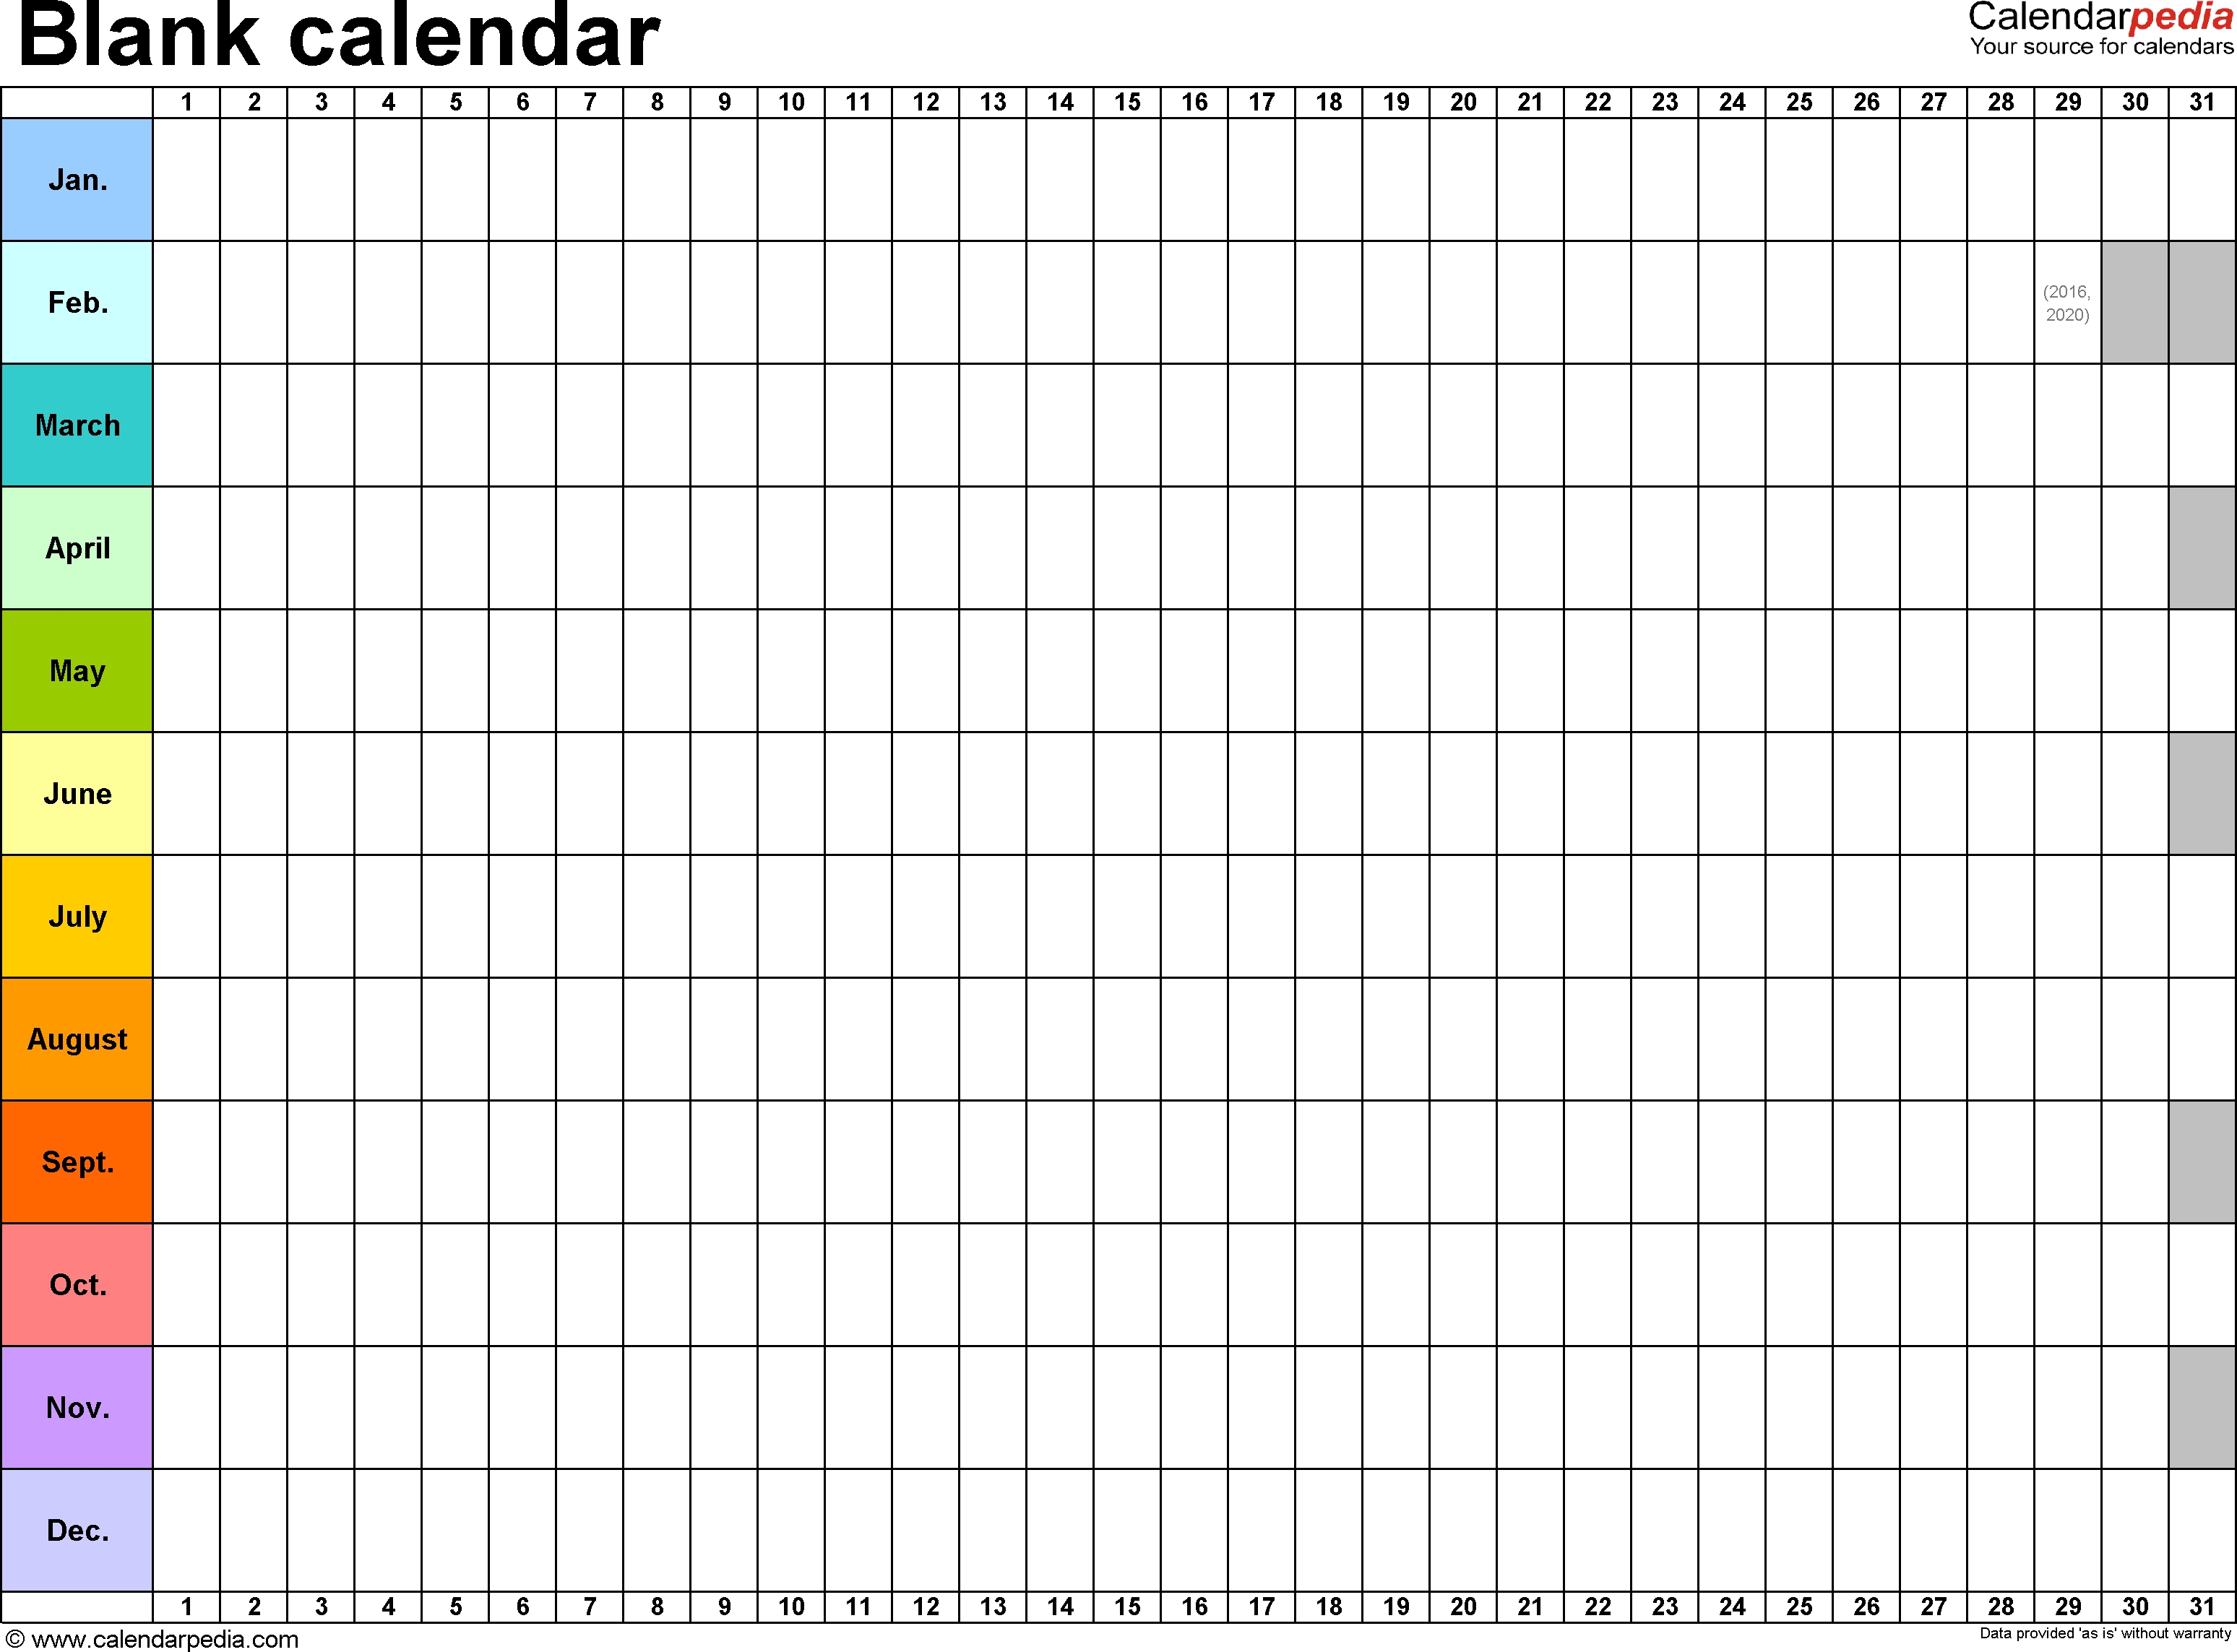 Blank Calendar - 9 Free Printable Microsoft Word Templates Calendar Month November 1997